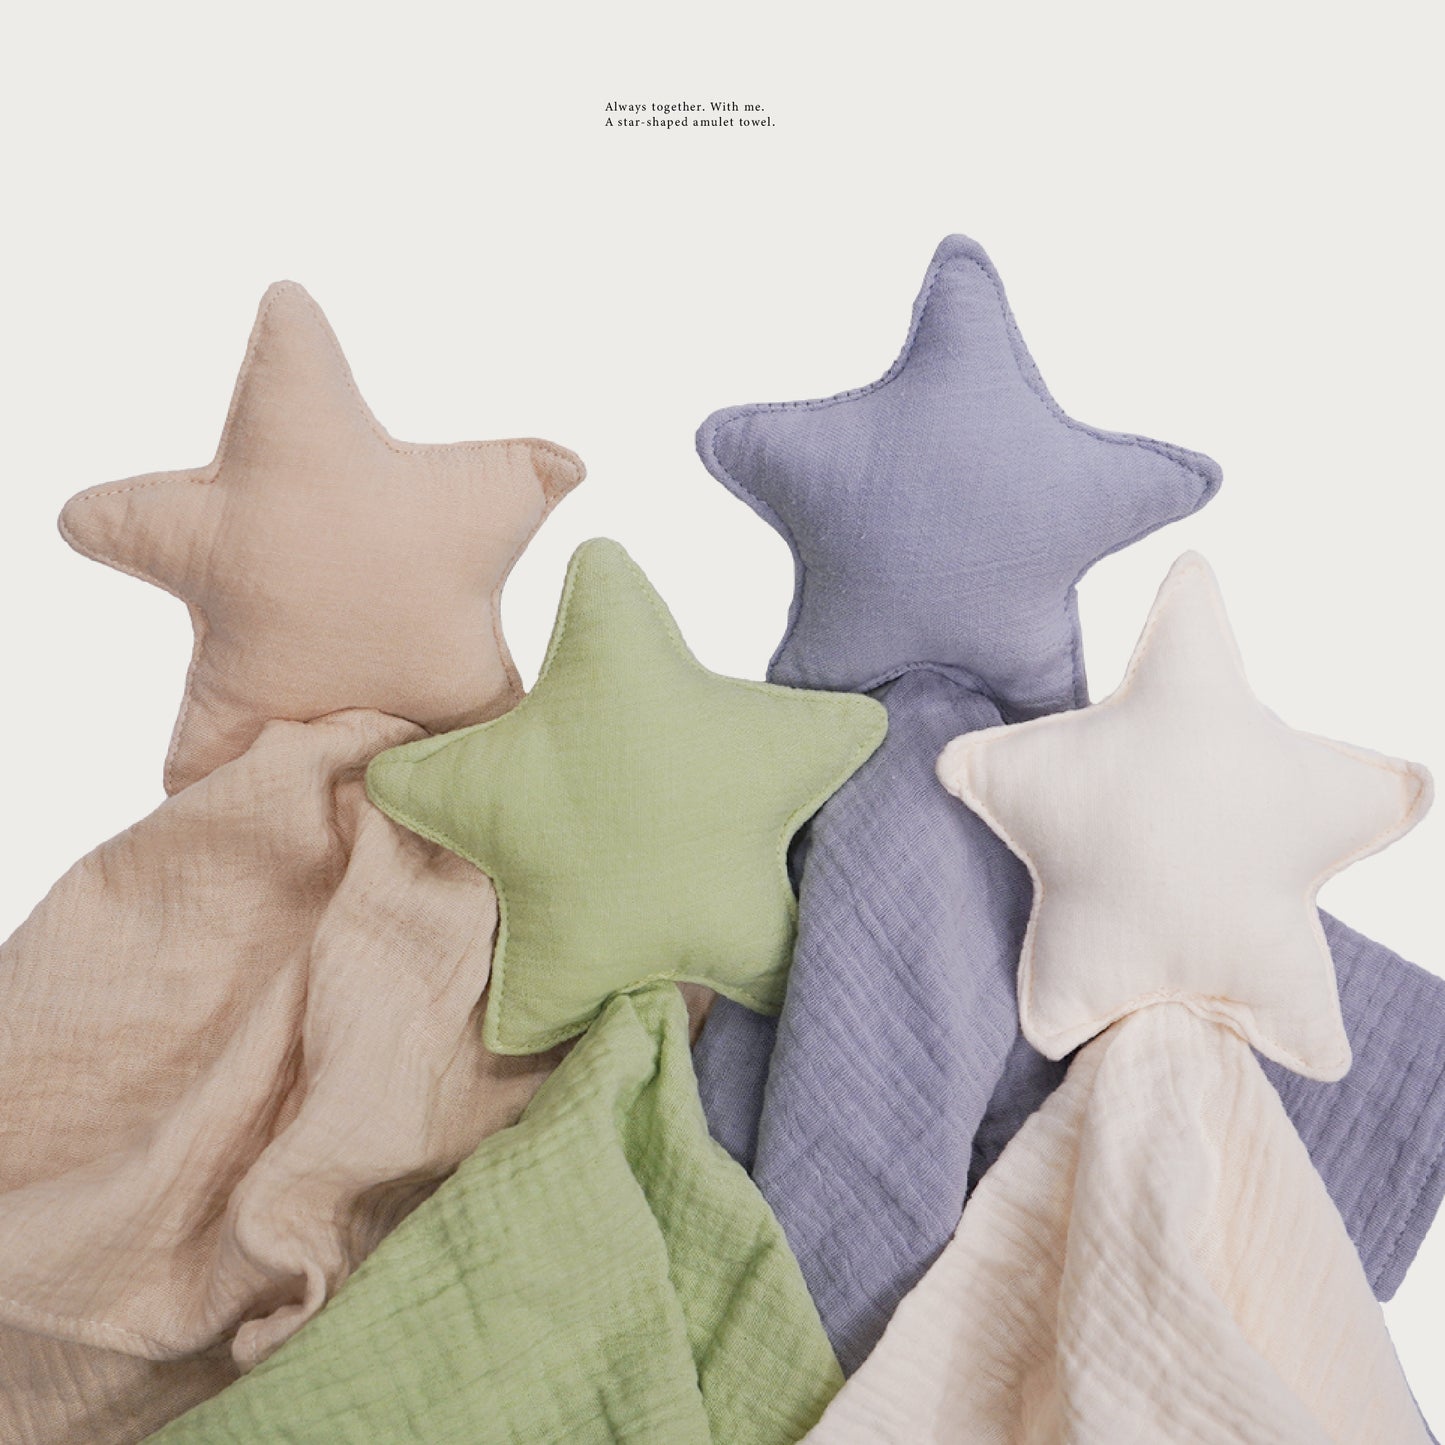 Star baby towel（スターベビータオル）